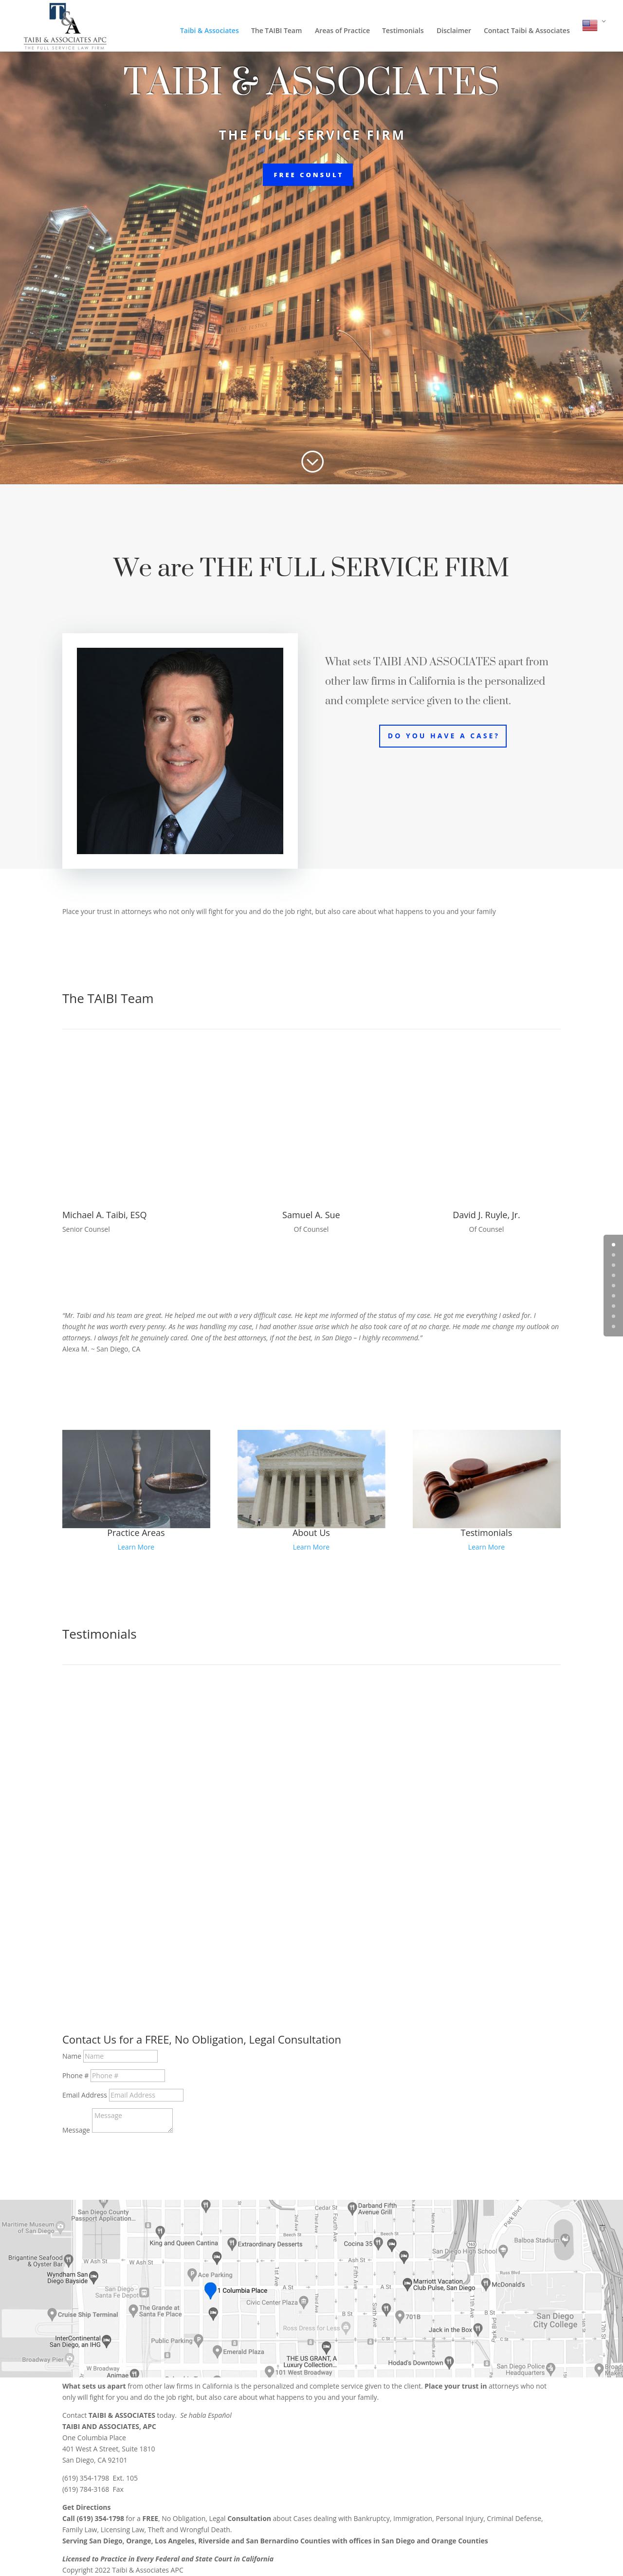 Taibi & Associates - Poway CA Lawyers